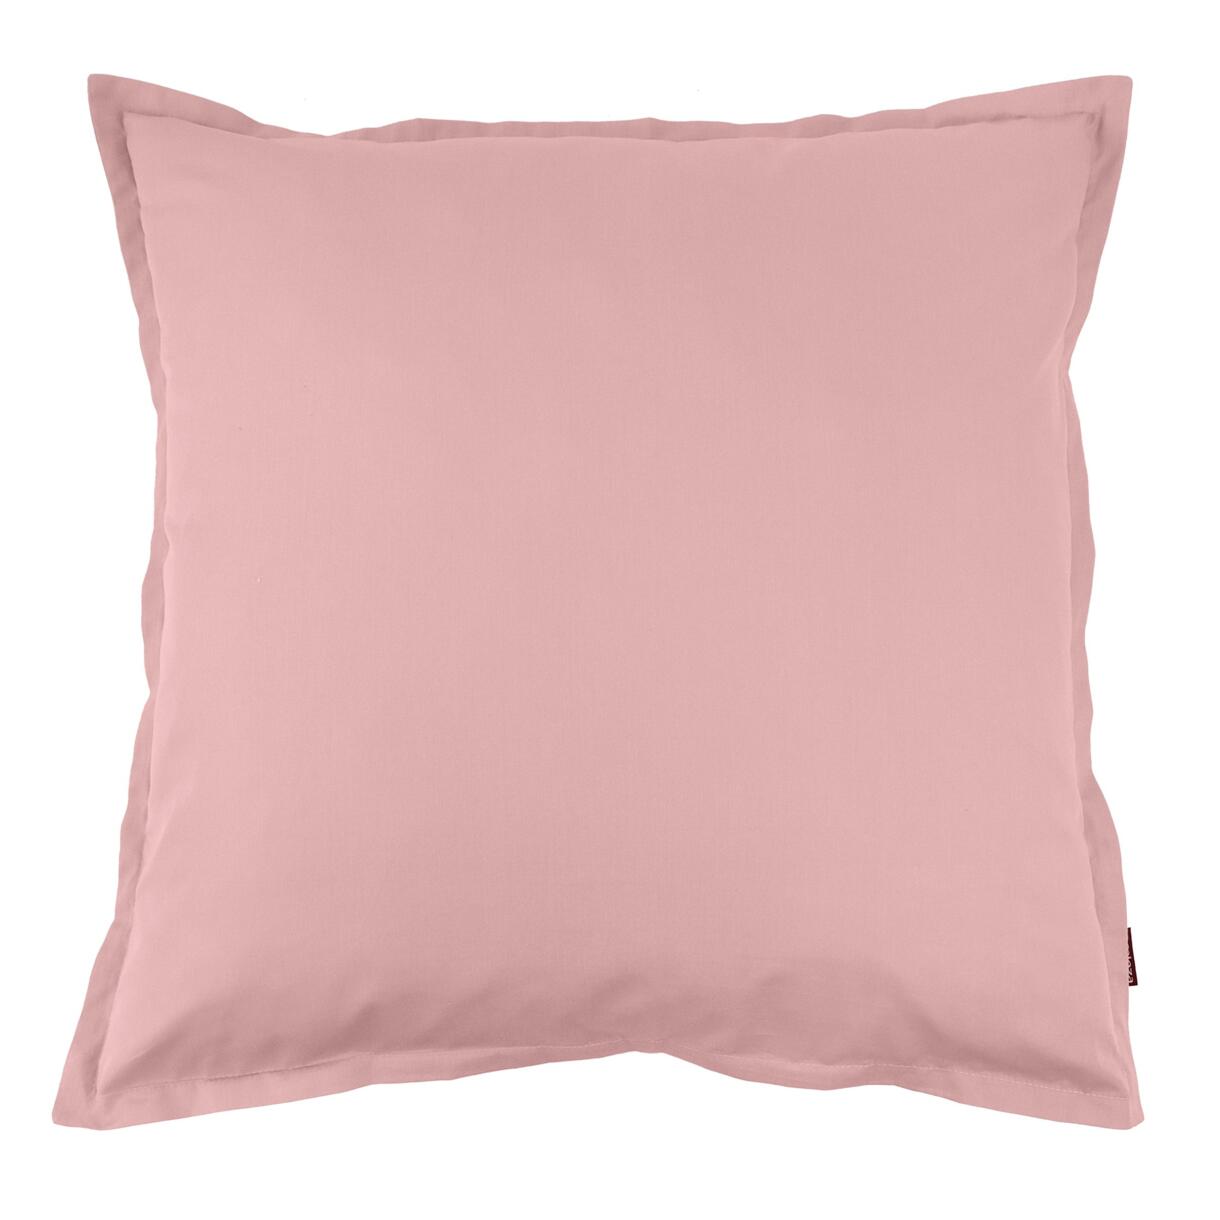 Funda de almohada cuadrada de percal de algodón (65 cm) Cali Rosa palo 1